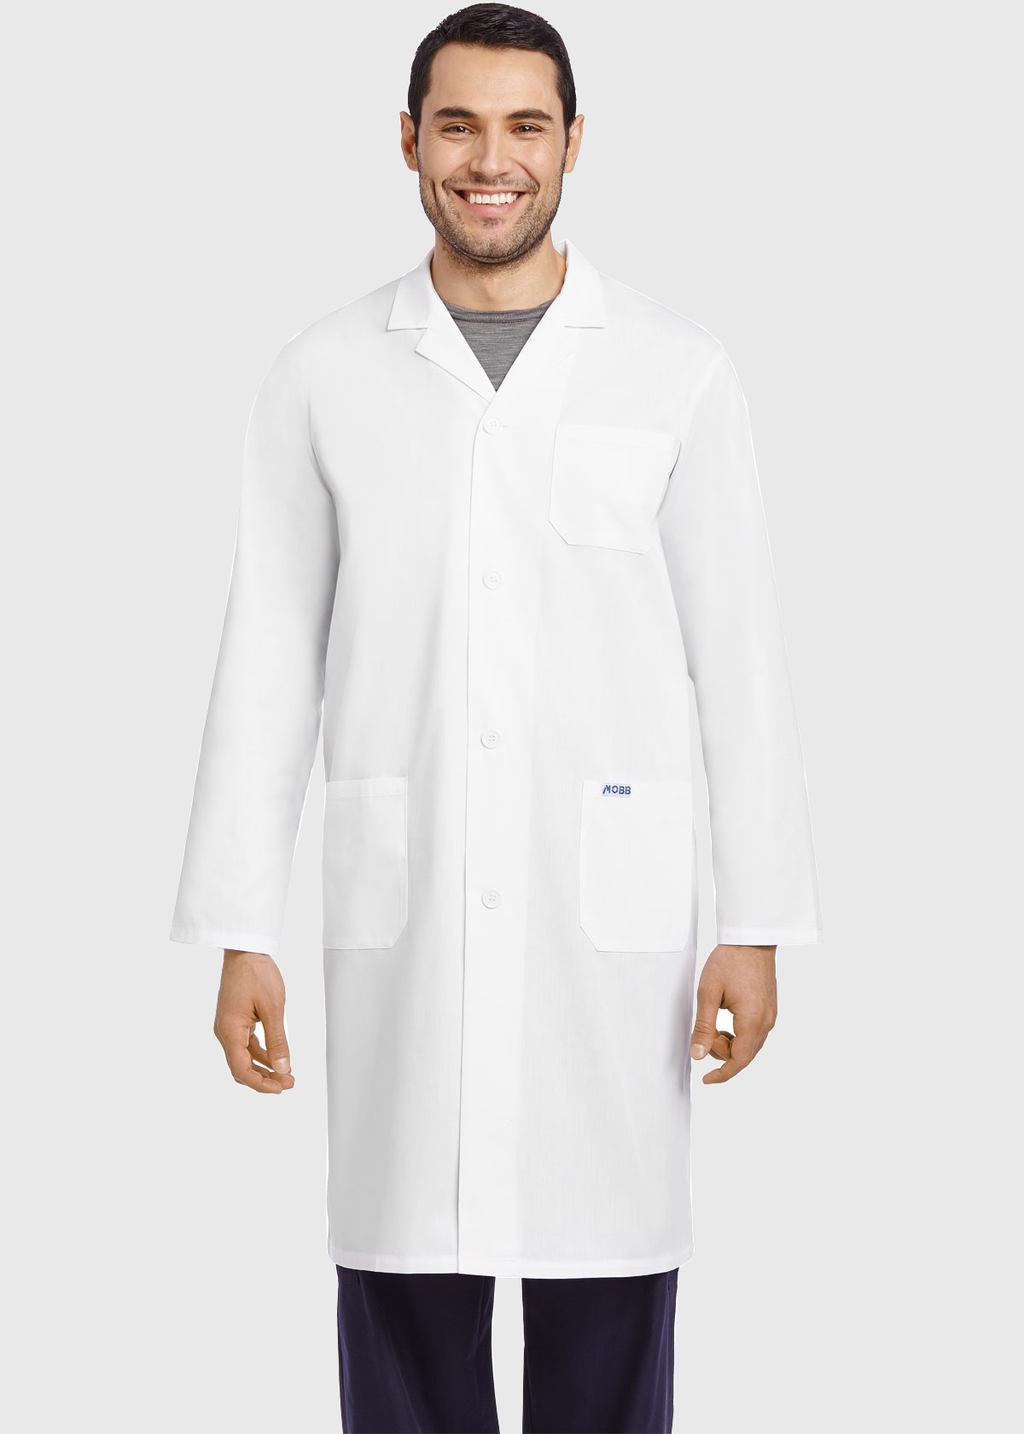 Product - Unisex Full Length Lab Jacket by MOBB